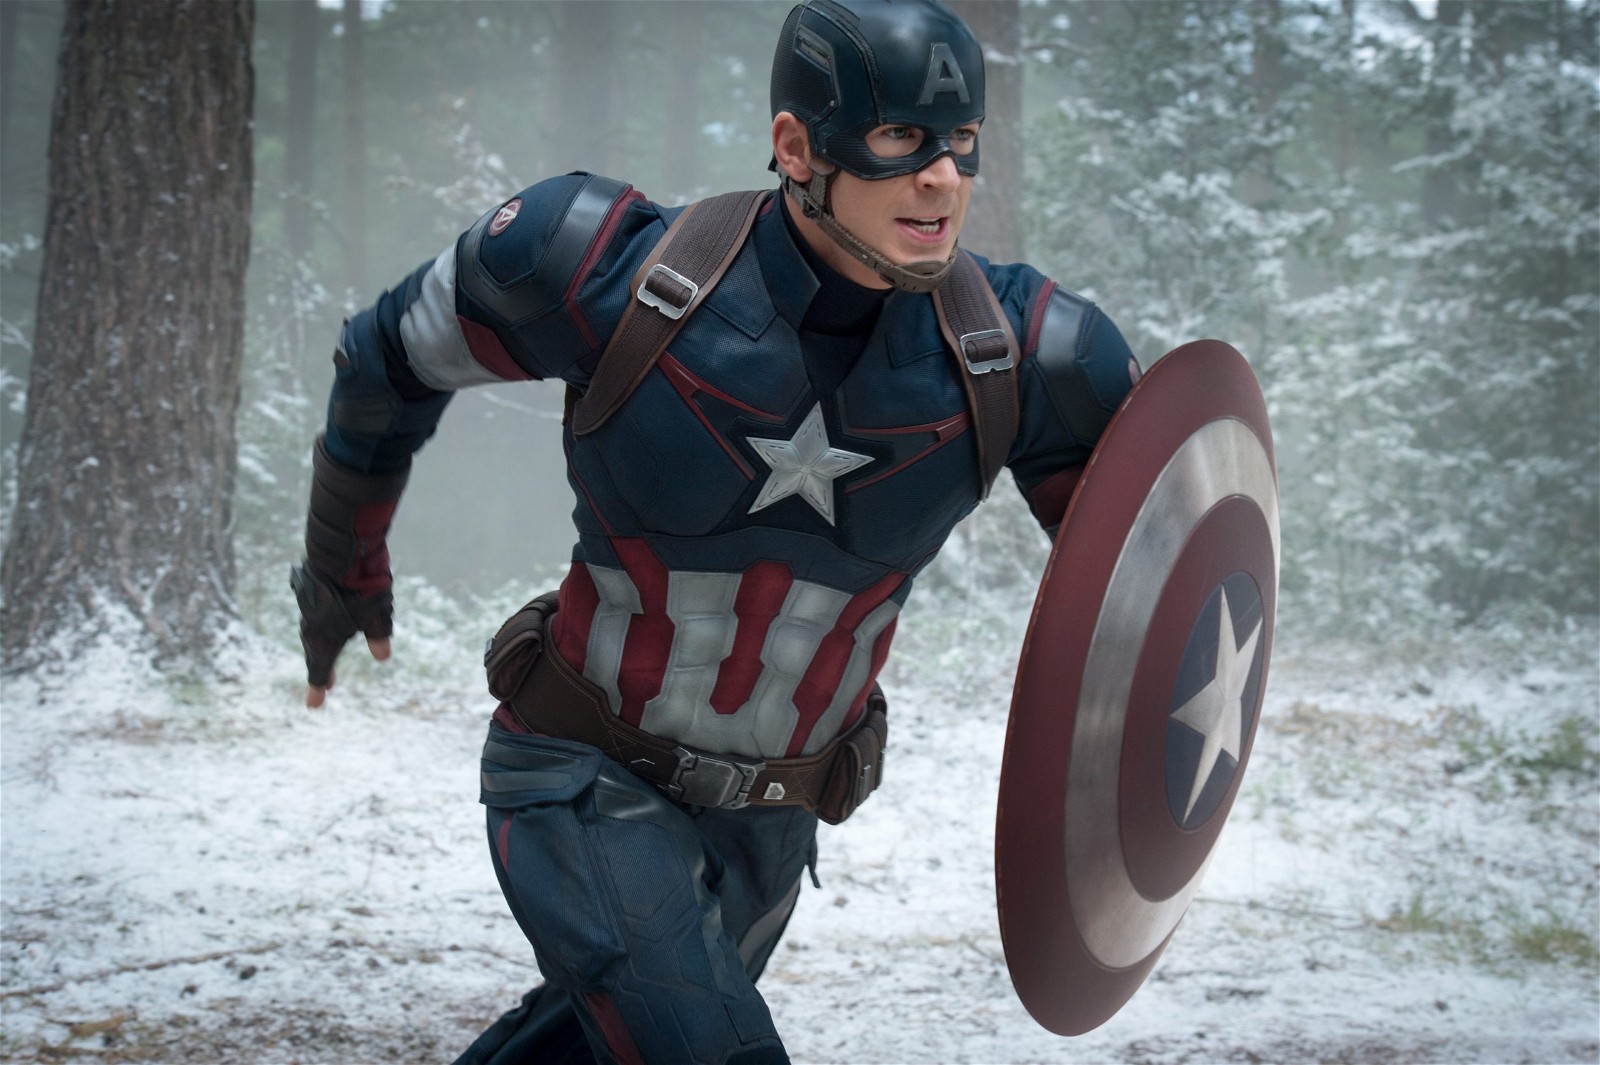 Chris Evans as Captain America in the MCU.